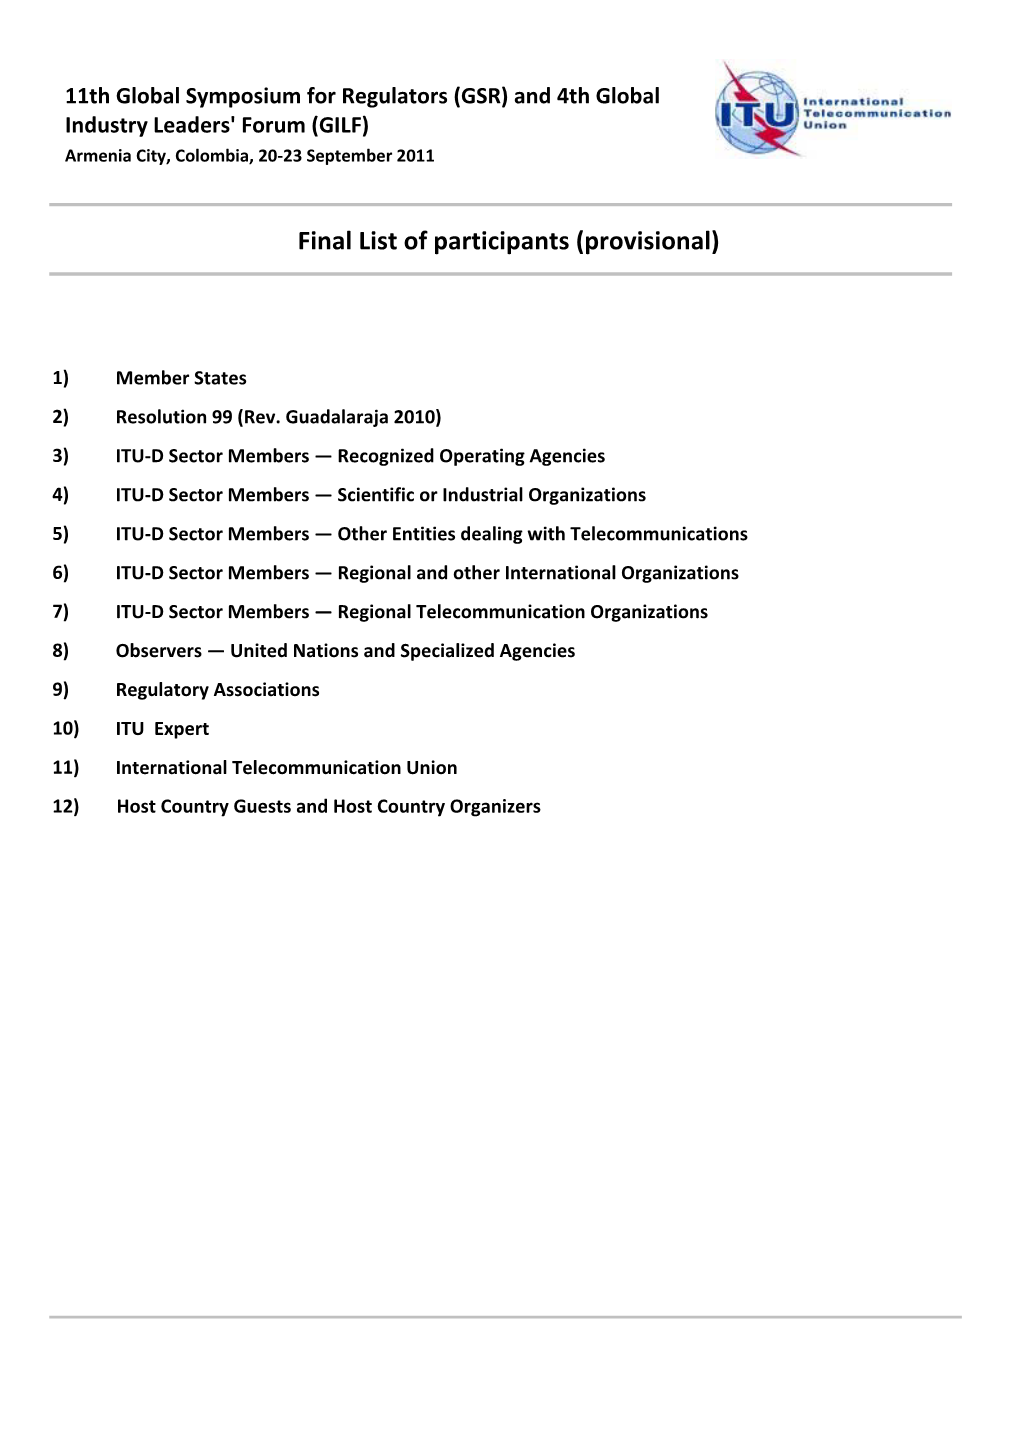 List of Participants (Provisional)